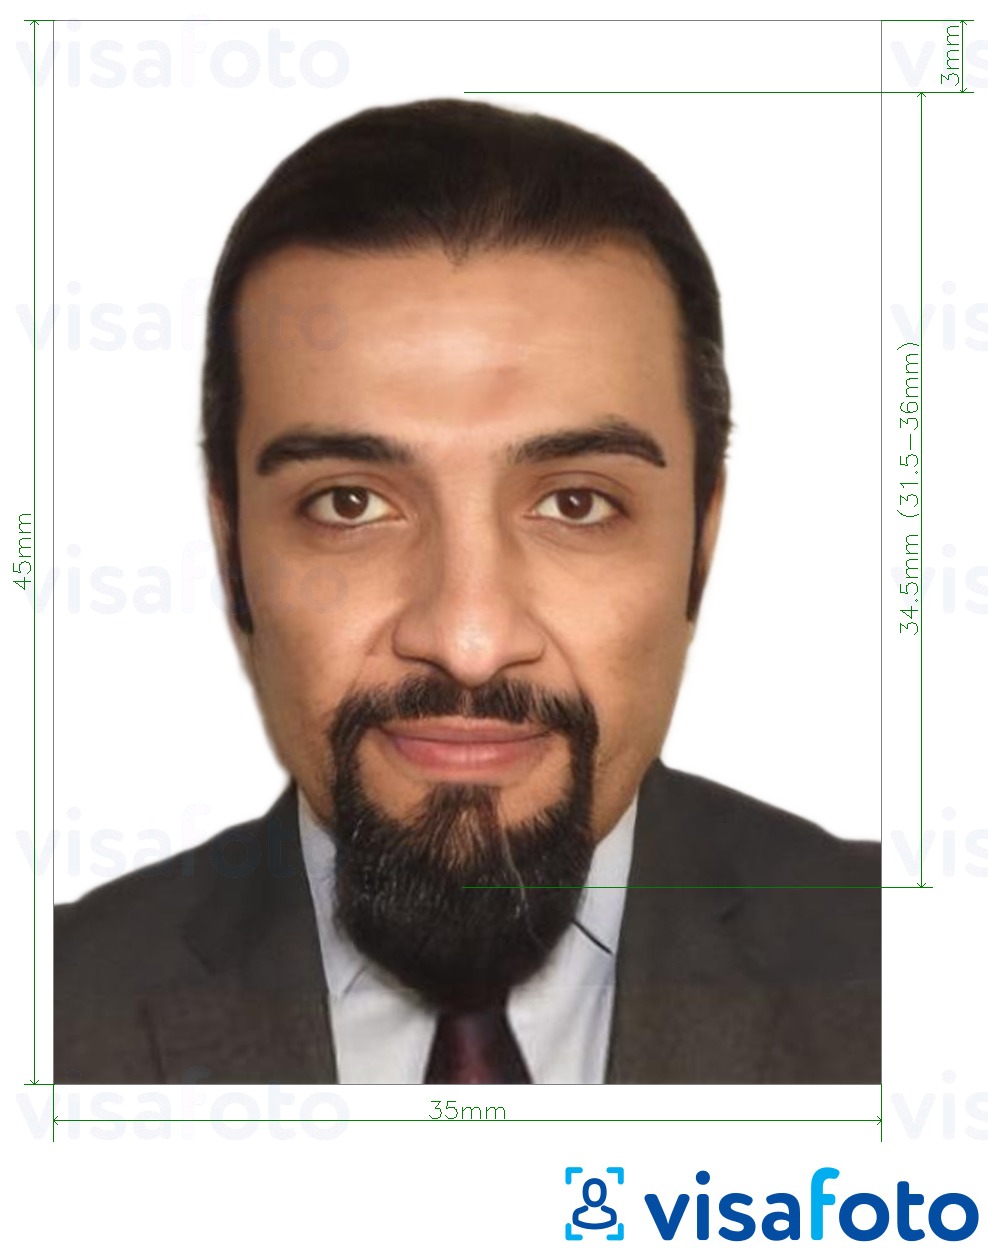 Contoh foto untuk Ethiopia e-visa dalam talian 35x45 mm (3.5x4.5 cm) dengan spesifikasi saiz yang tepat.